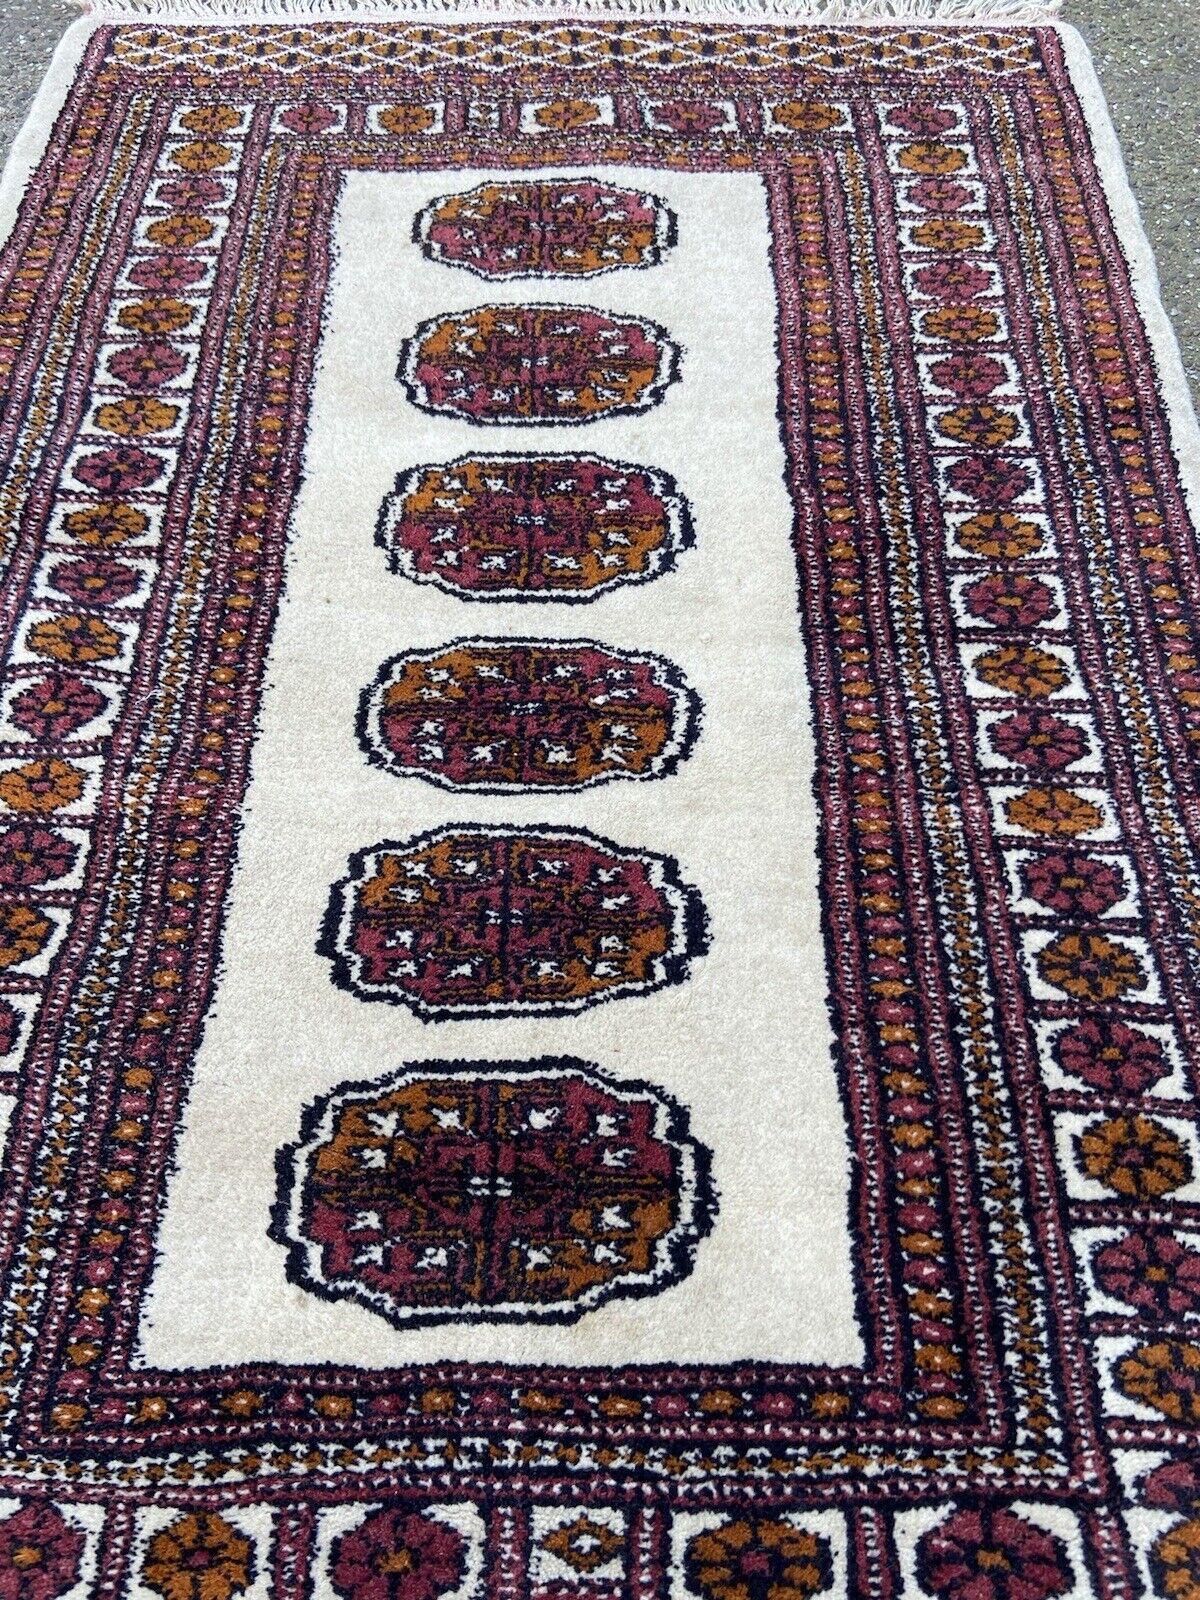 Handmade Vintage Uzbek Bukhara Rug 2.7' x 4.3', 1960s - 1S09 For Sale 2